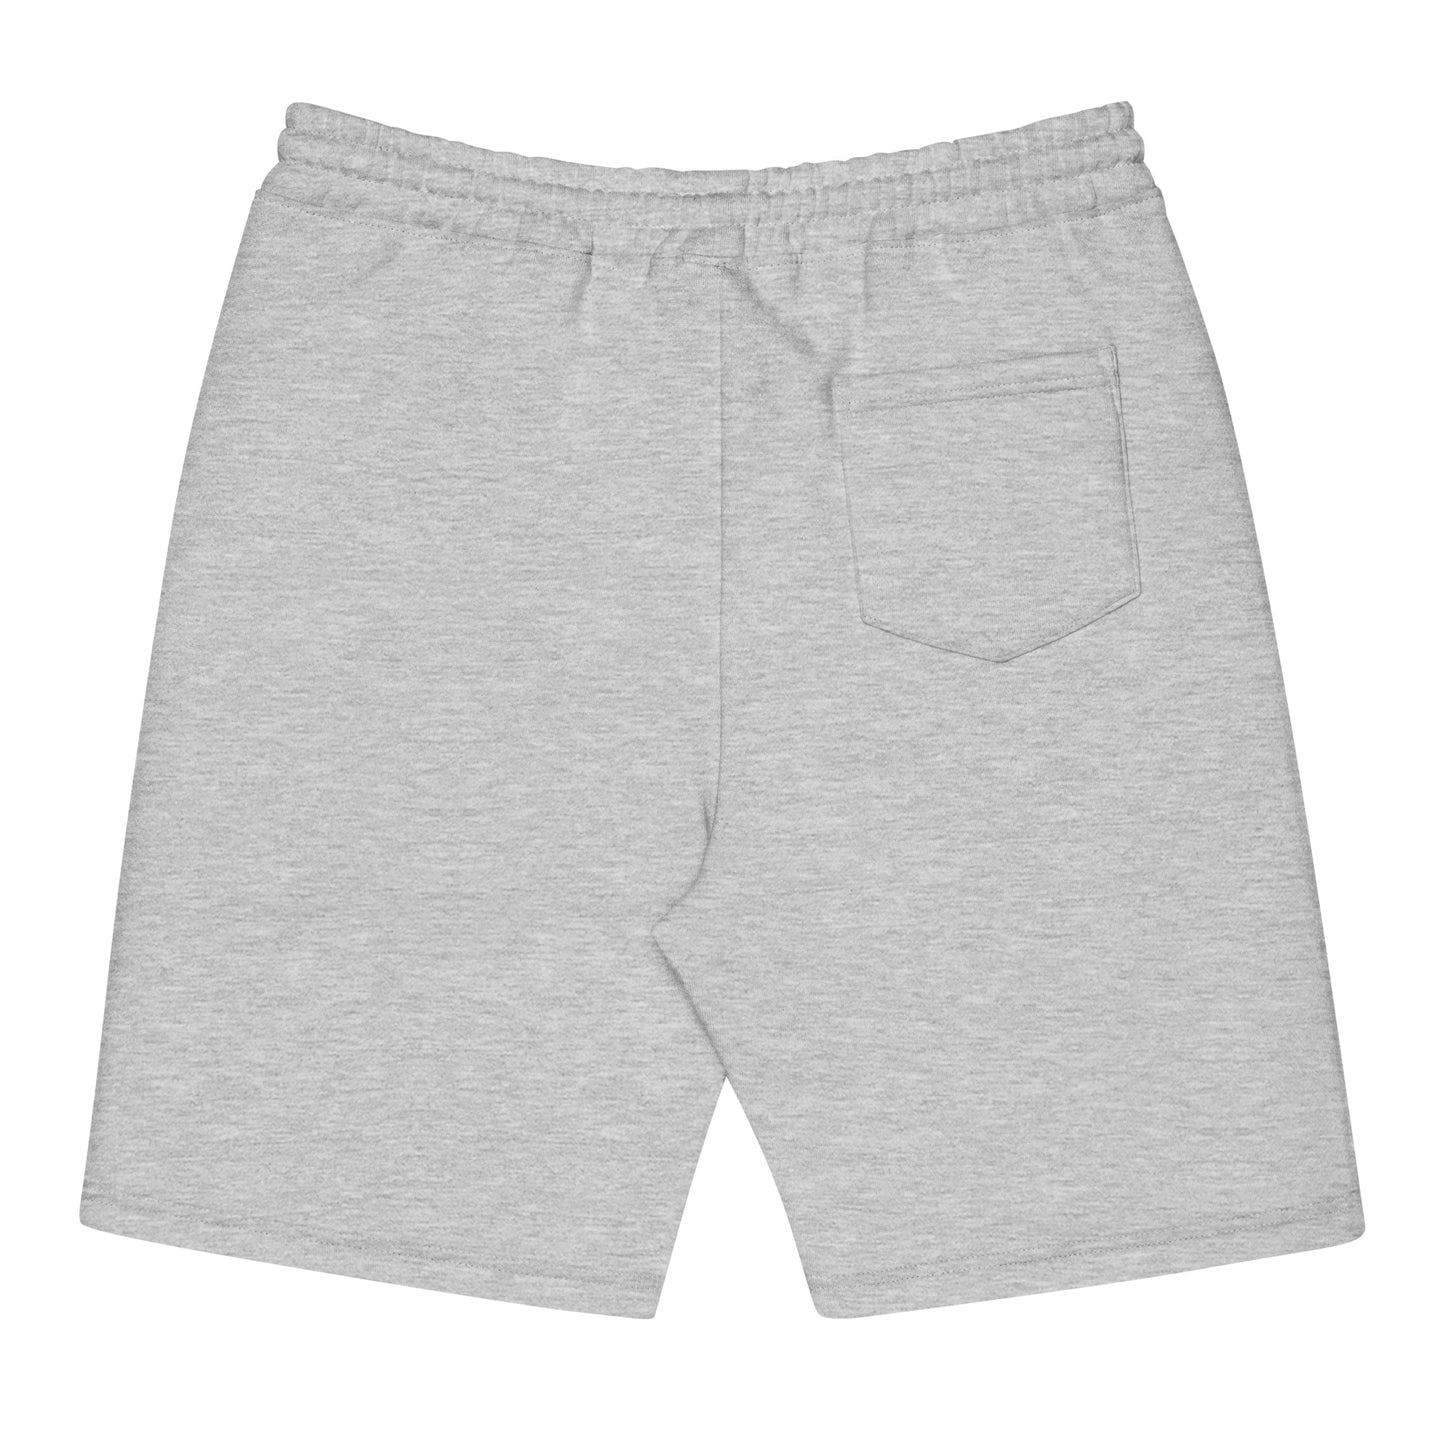 Men's shorts SLC LIVE ON matching bottom